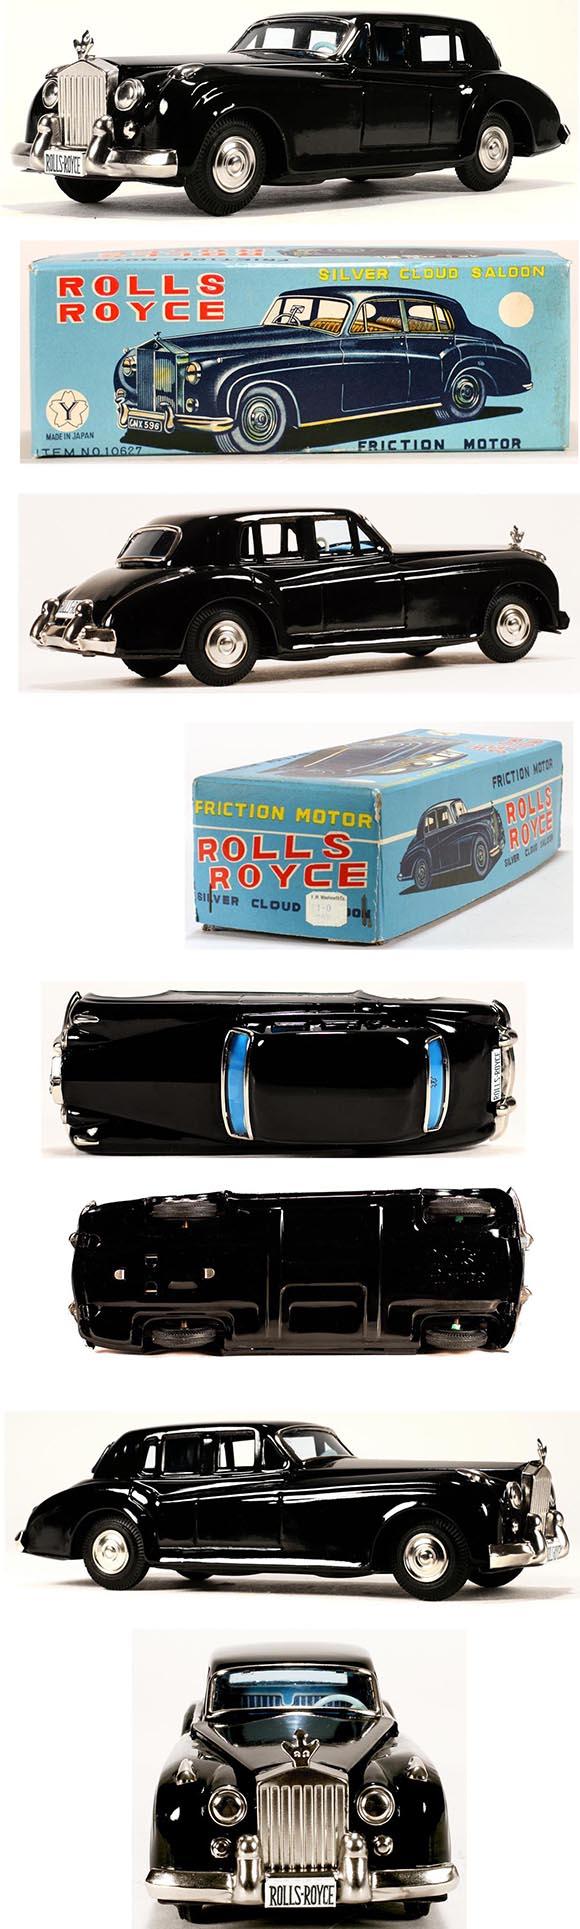 c.1965 Yonezawa Rolls Royce Silver Cloud in Original Box